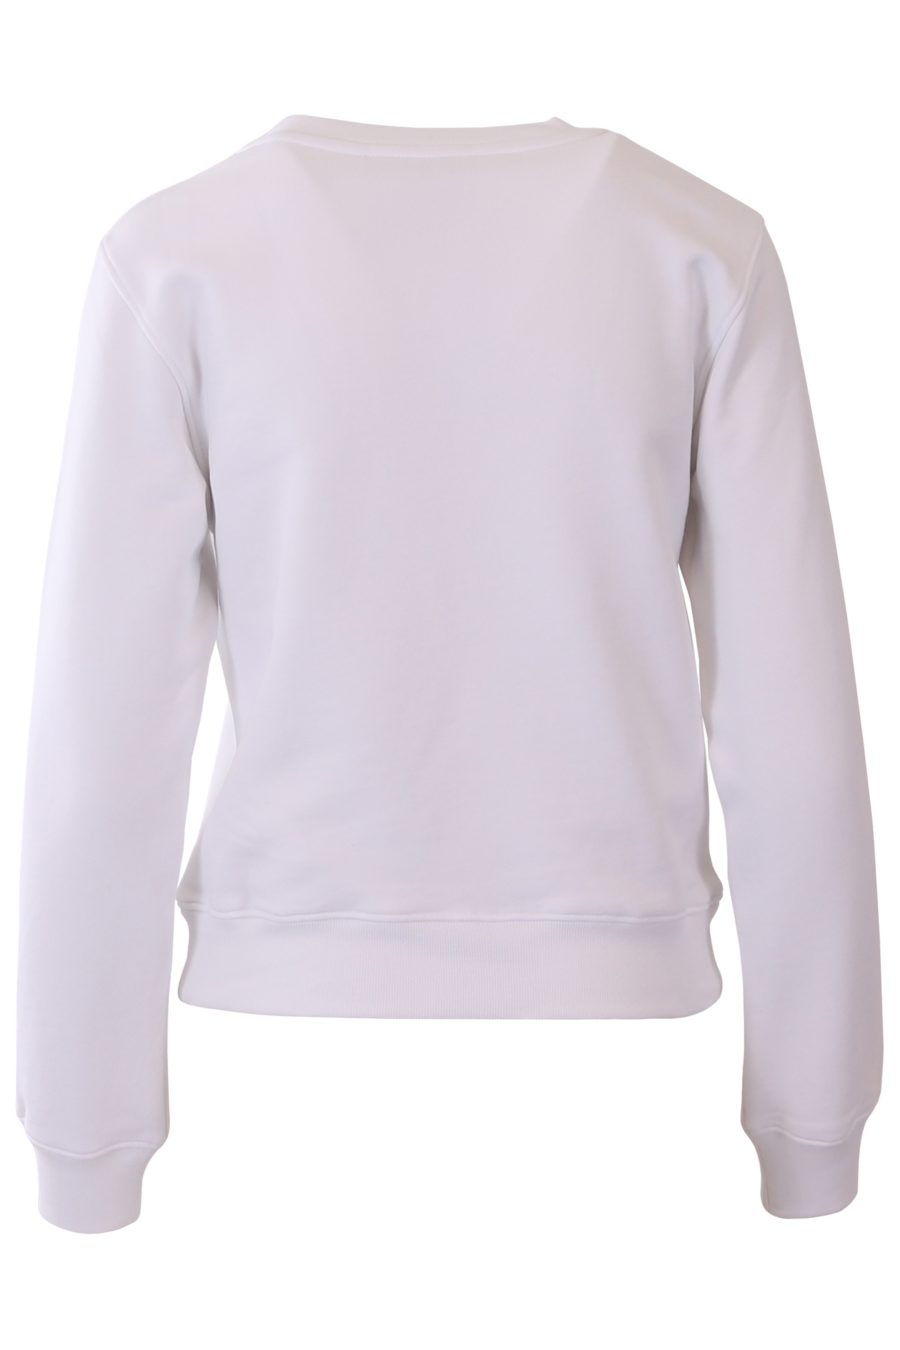 Moschino Couture weißes Sweatshirt mit großem Logo - 0d0a3496e76eacfa9f449c69d07e31507bf6f538